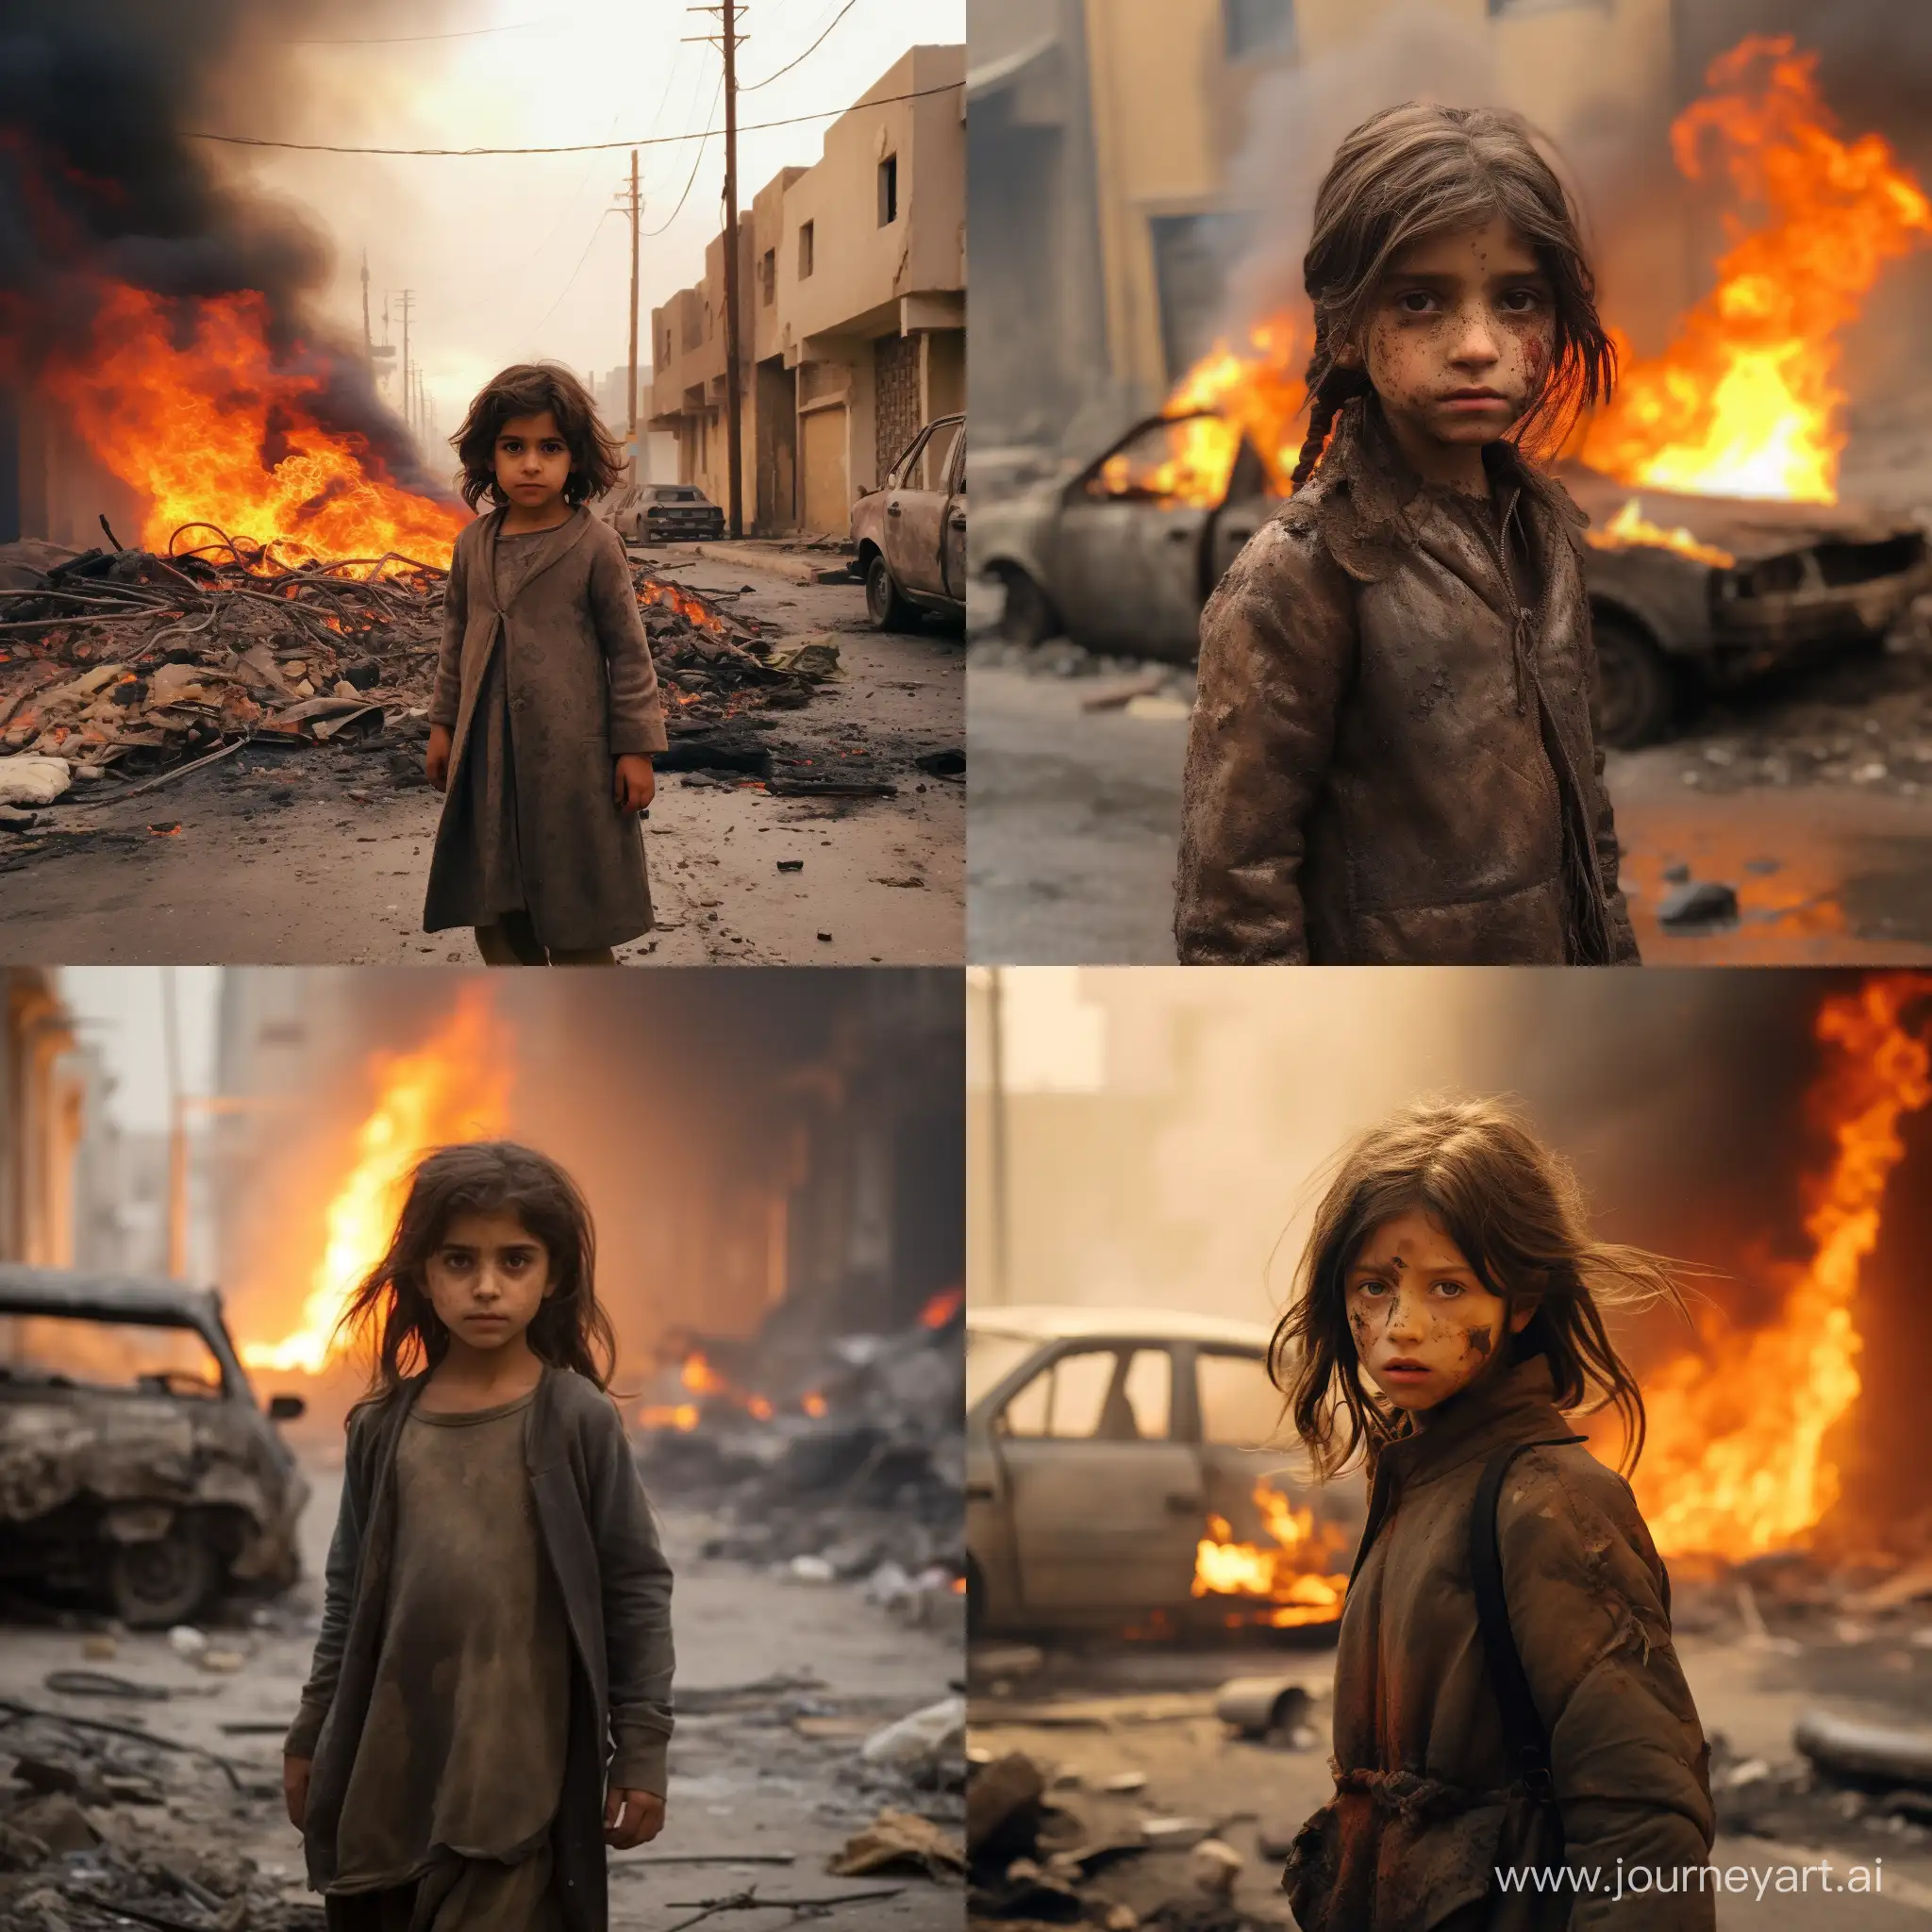 Distressed-Child-Amidst-Street-Chaos-in-Kerman-Iran